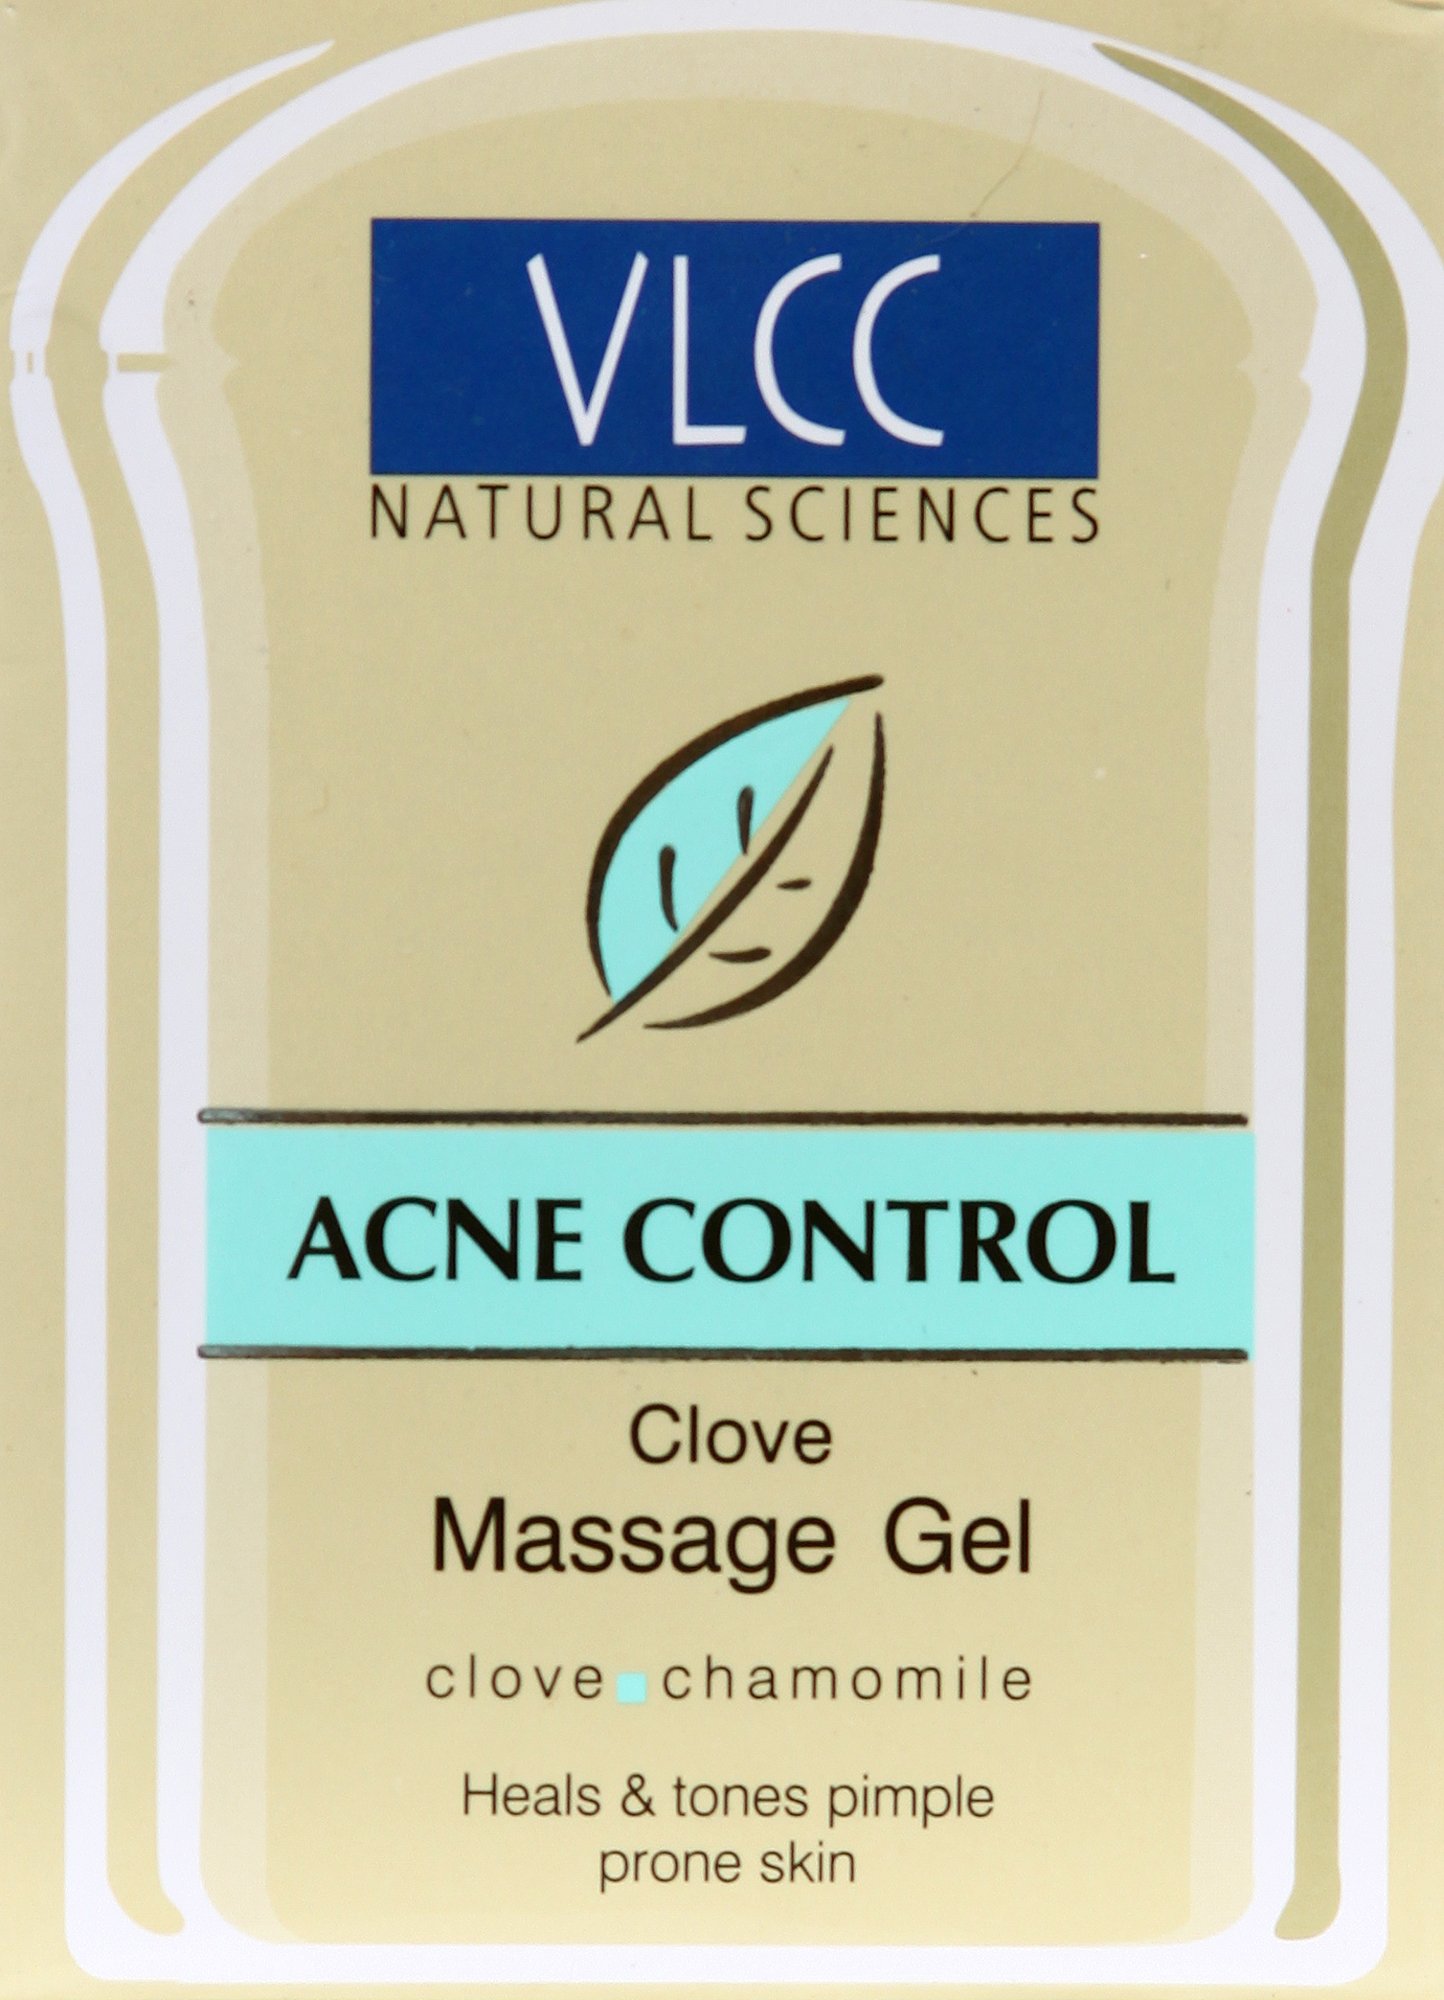 VLCC Acne Control (Clove Masage Gel) - book cover